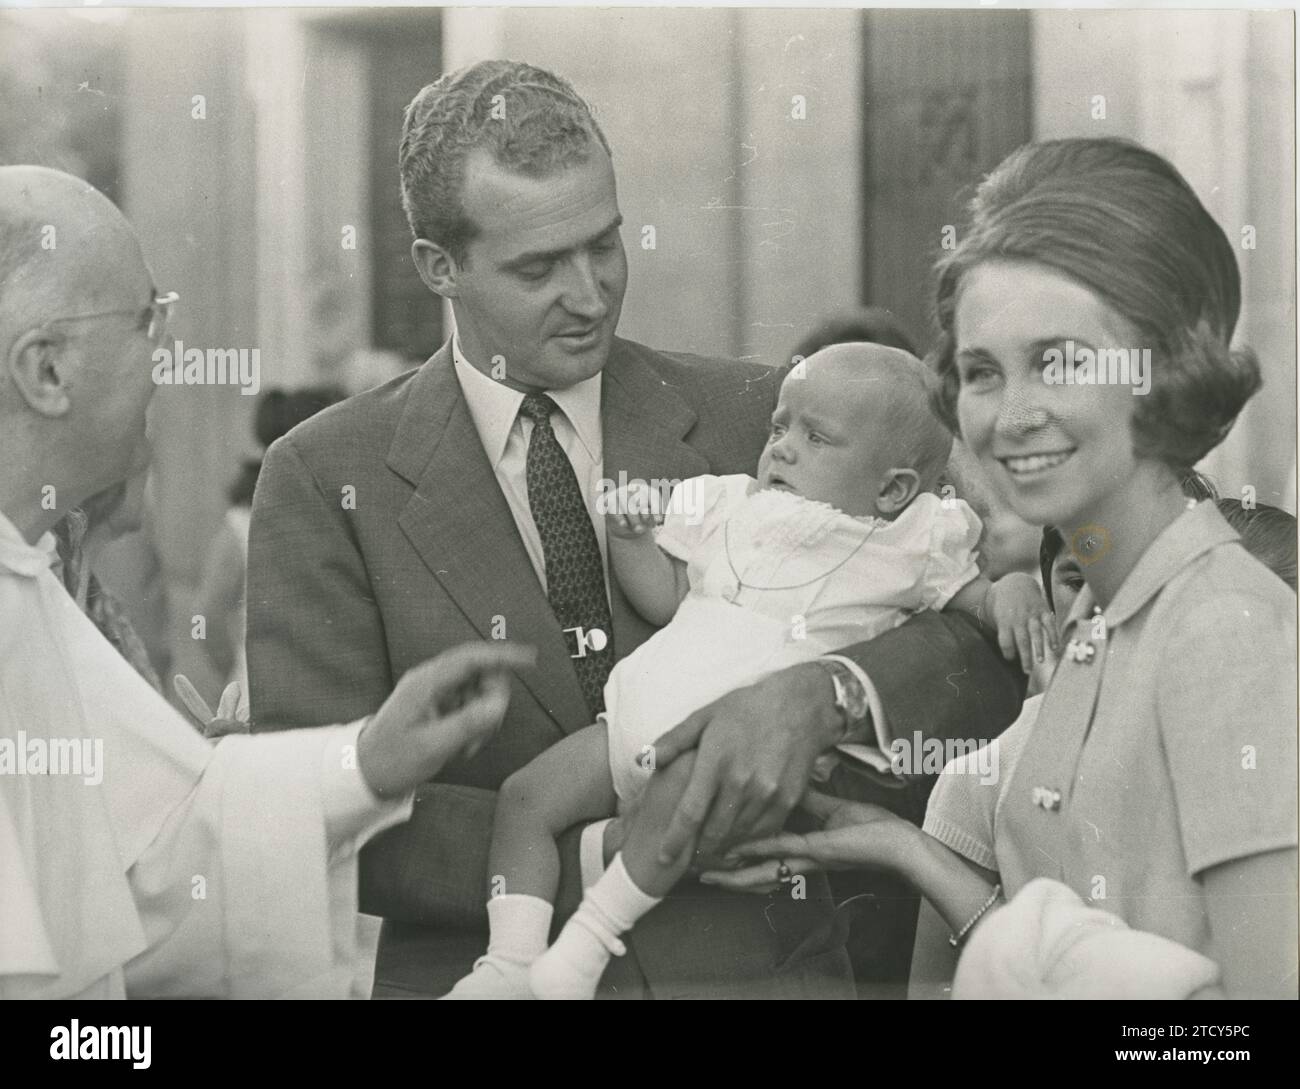 Madrid, 07/13/1968. Presentation of Infante Don Felipe to Our Lady of Atocha. Credit: Album / Archivo ABC Stock Photo